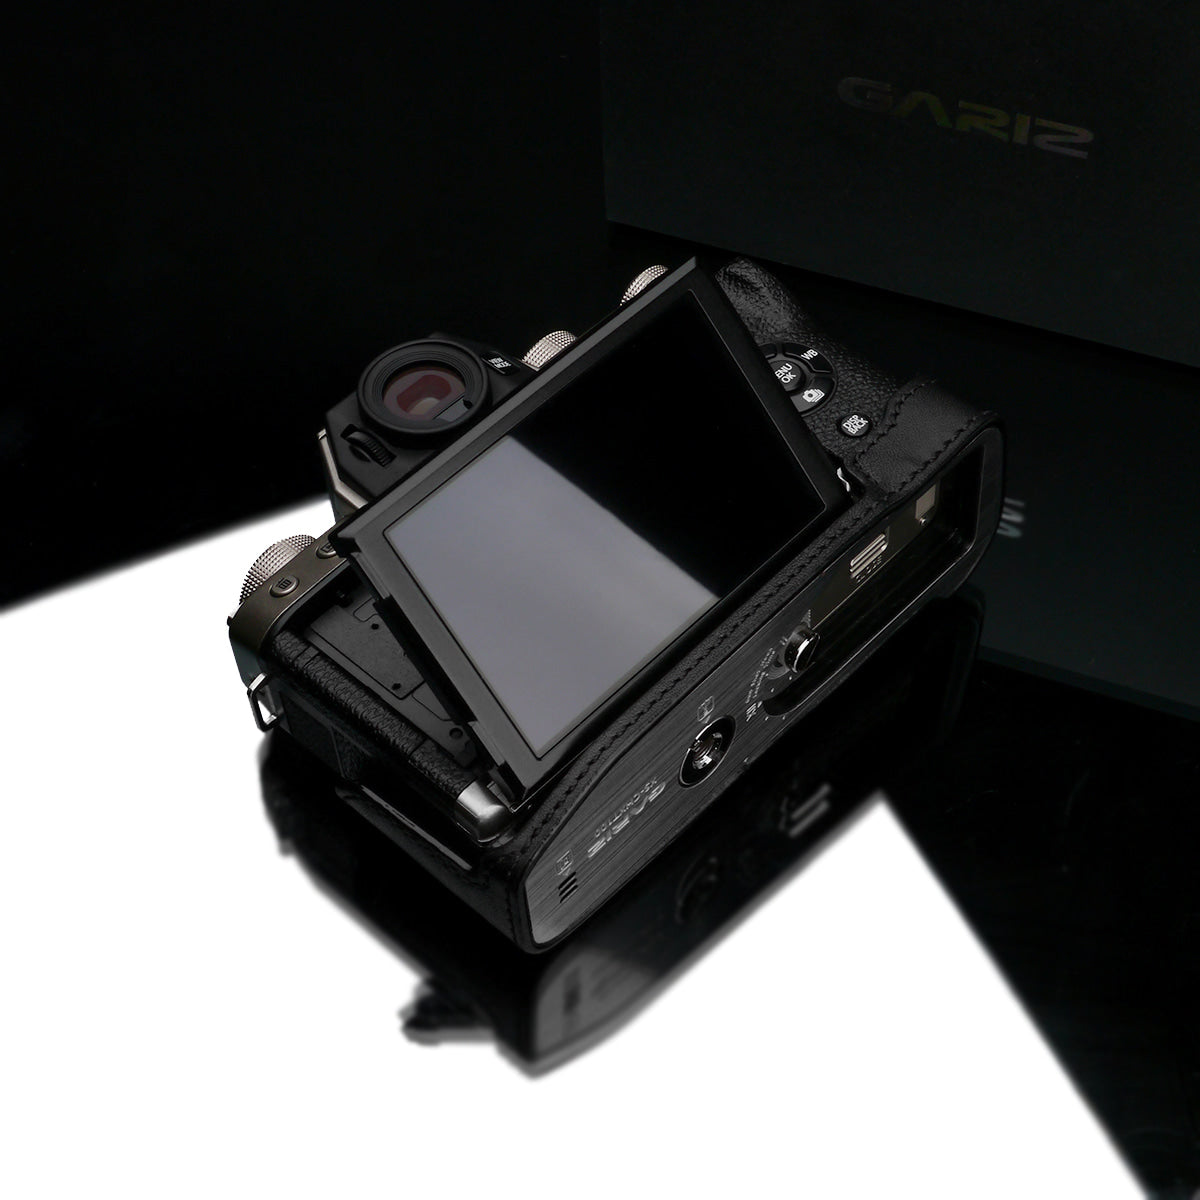 XS-CHXT100BK Leather Black Camera Half Case w/ Capfix for Fujifilm X-T100